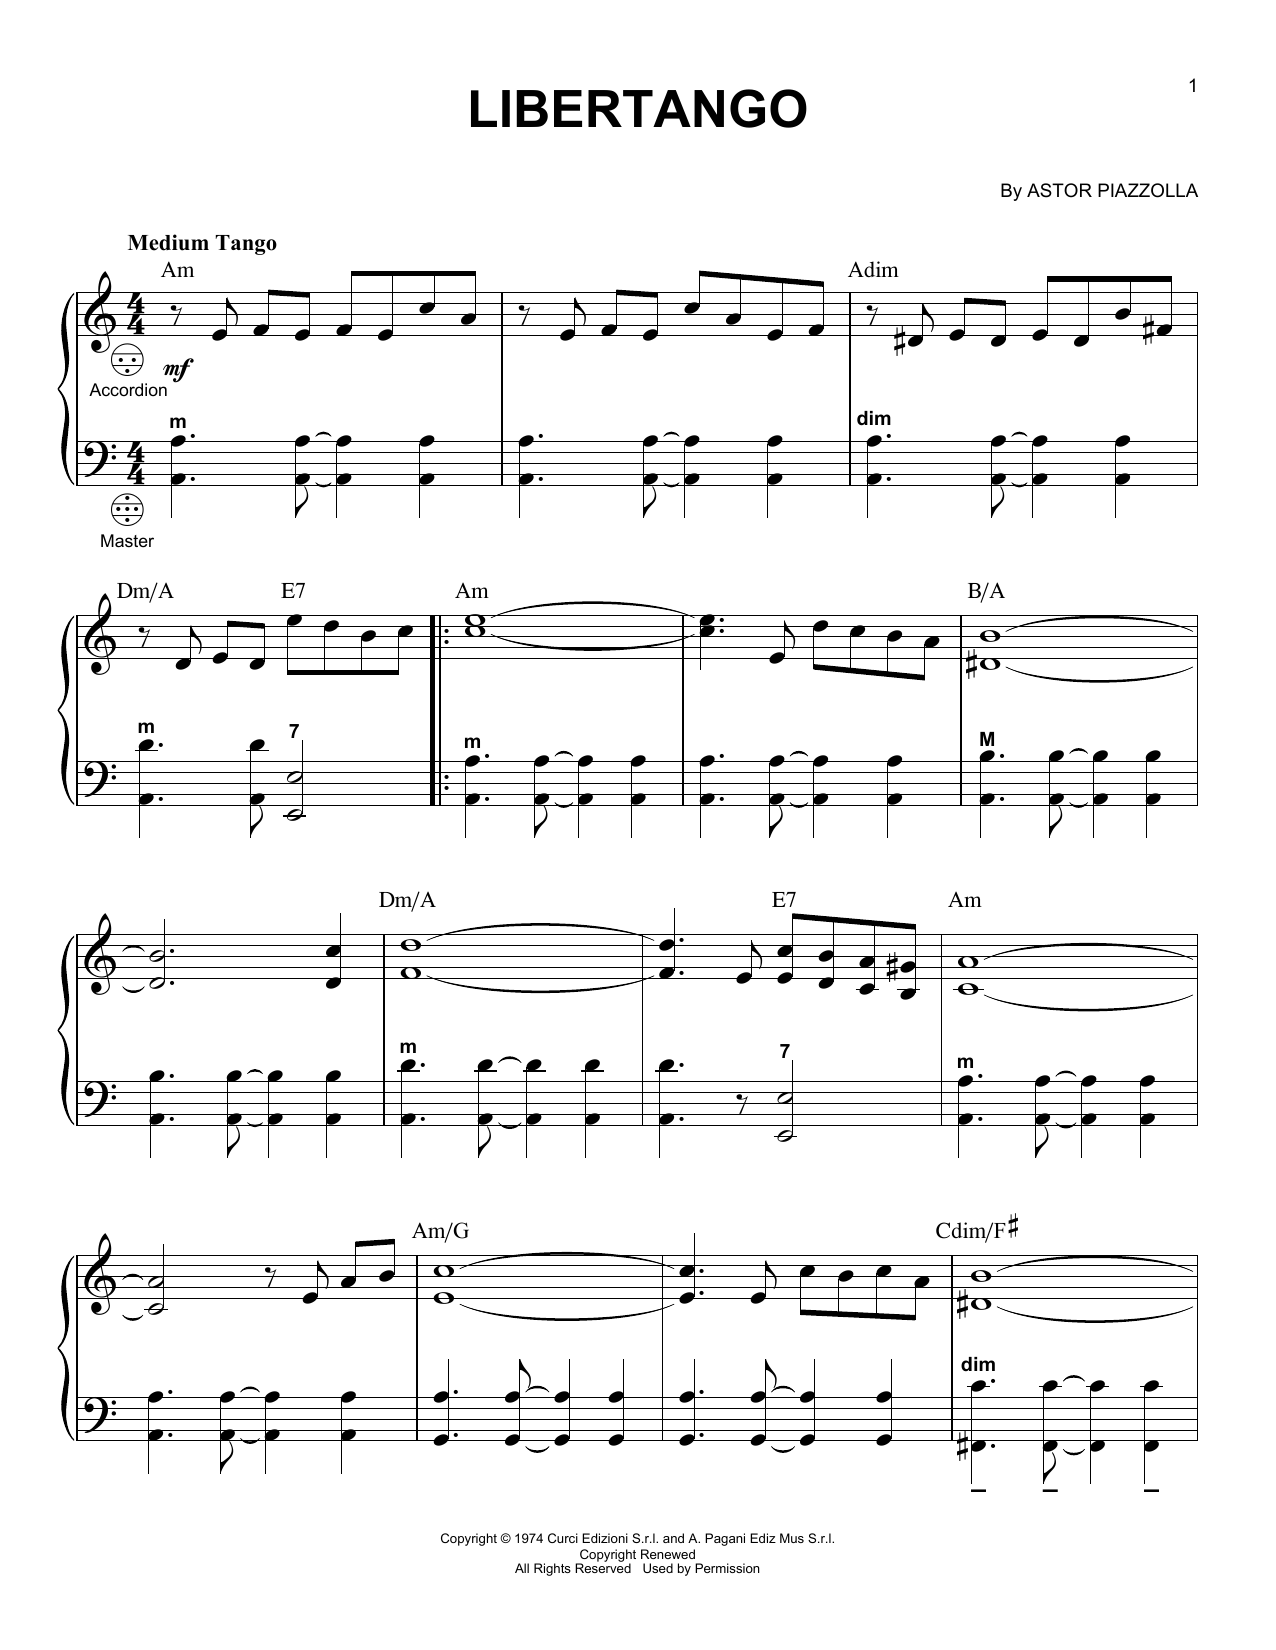 Gary Meisner Libertango Sheet Music Notes & Chords for Accordion - Download or Print PDF